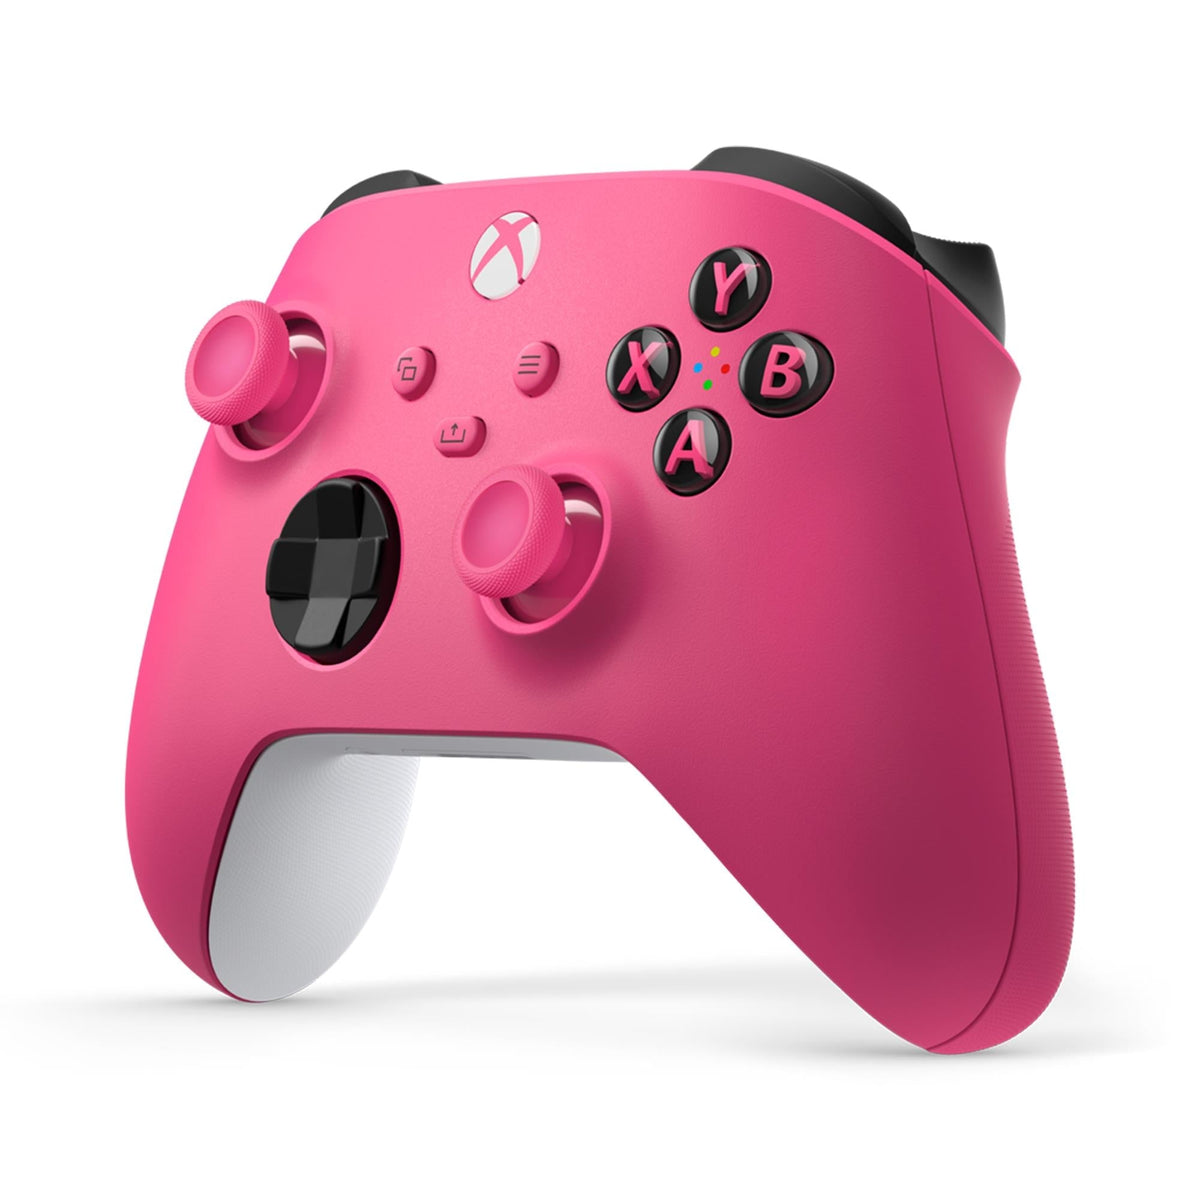 Xbox Controller - Deep Pink